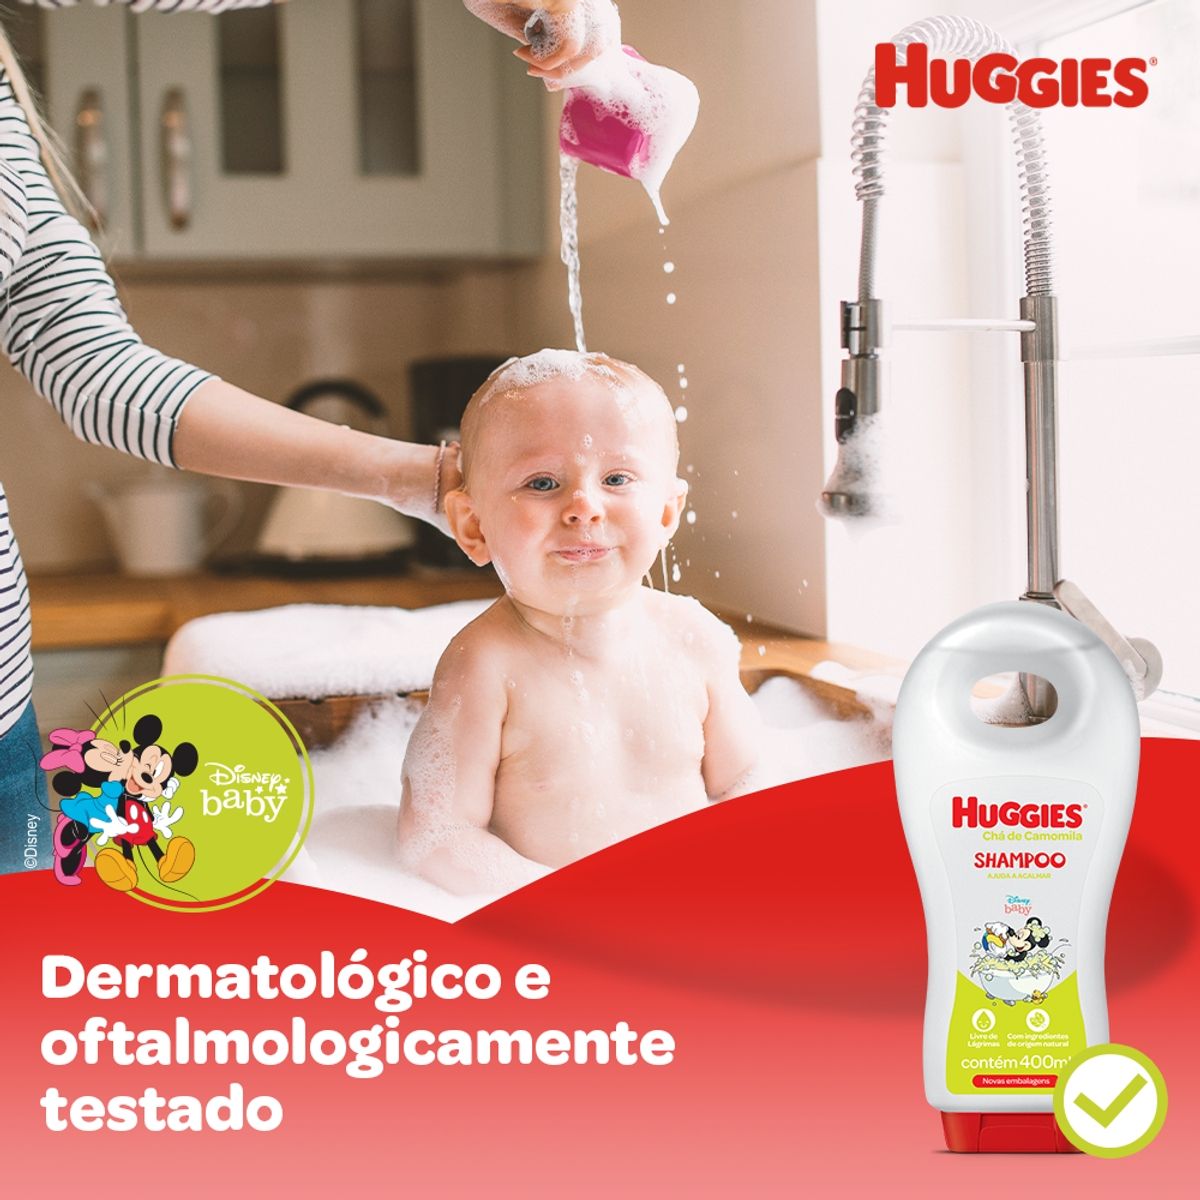 Shampoo Huggies Chá de Camomila - 400 ml image number 5